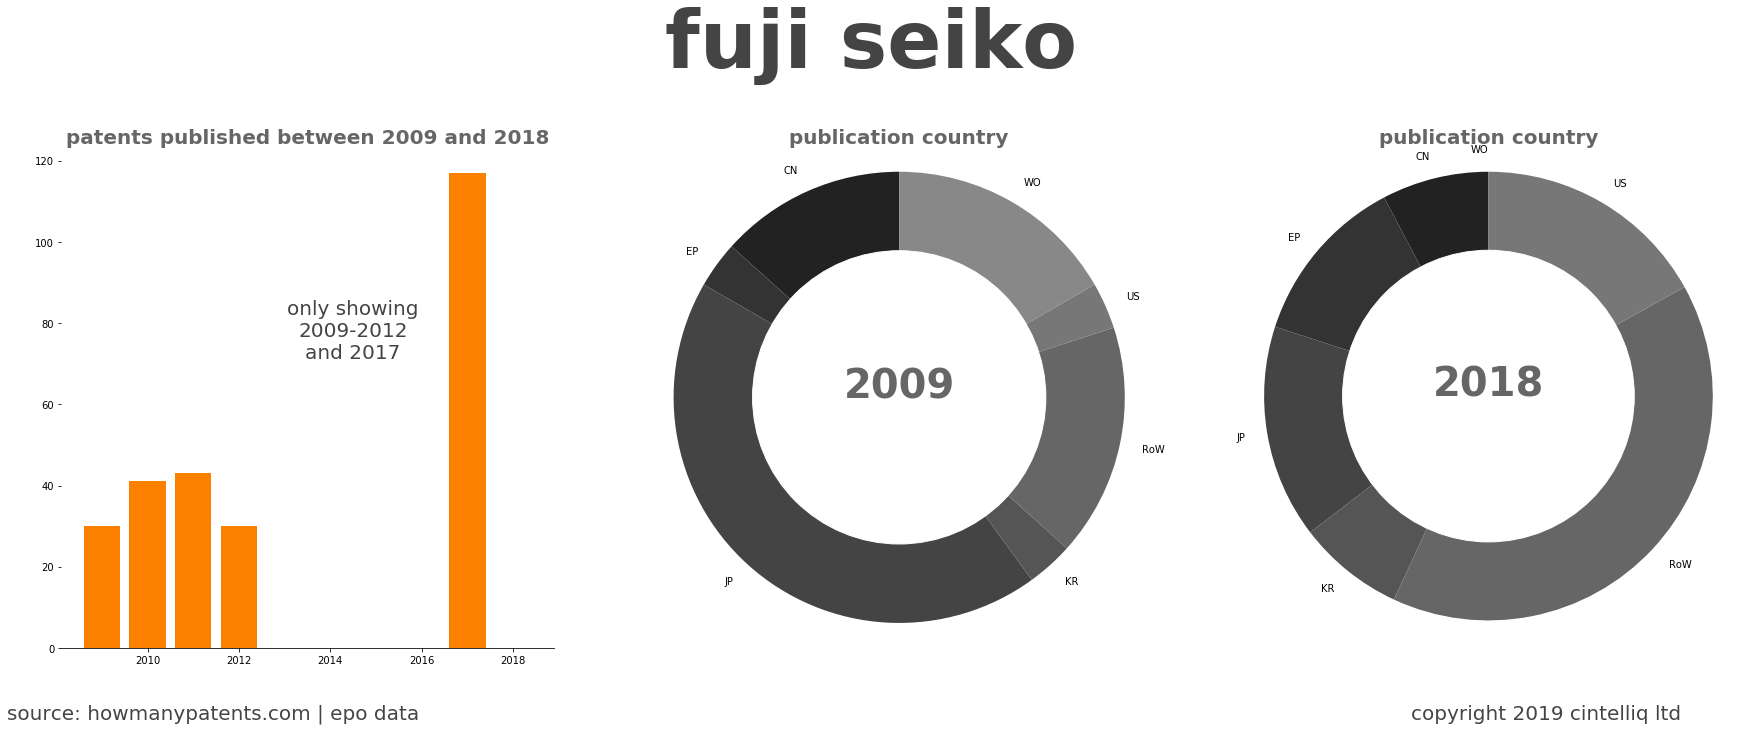 summary of patents for Fuji Seiko